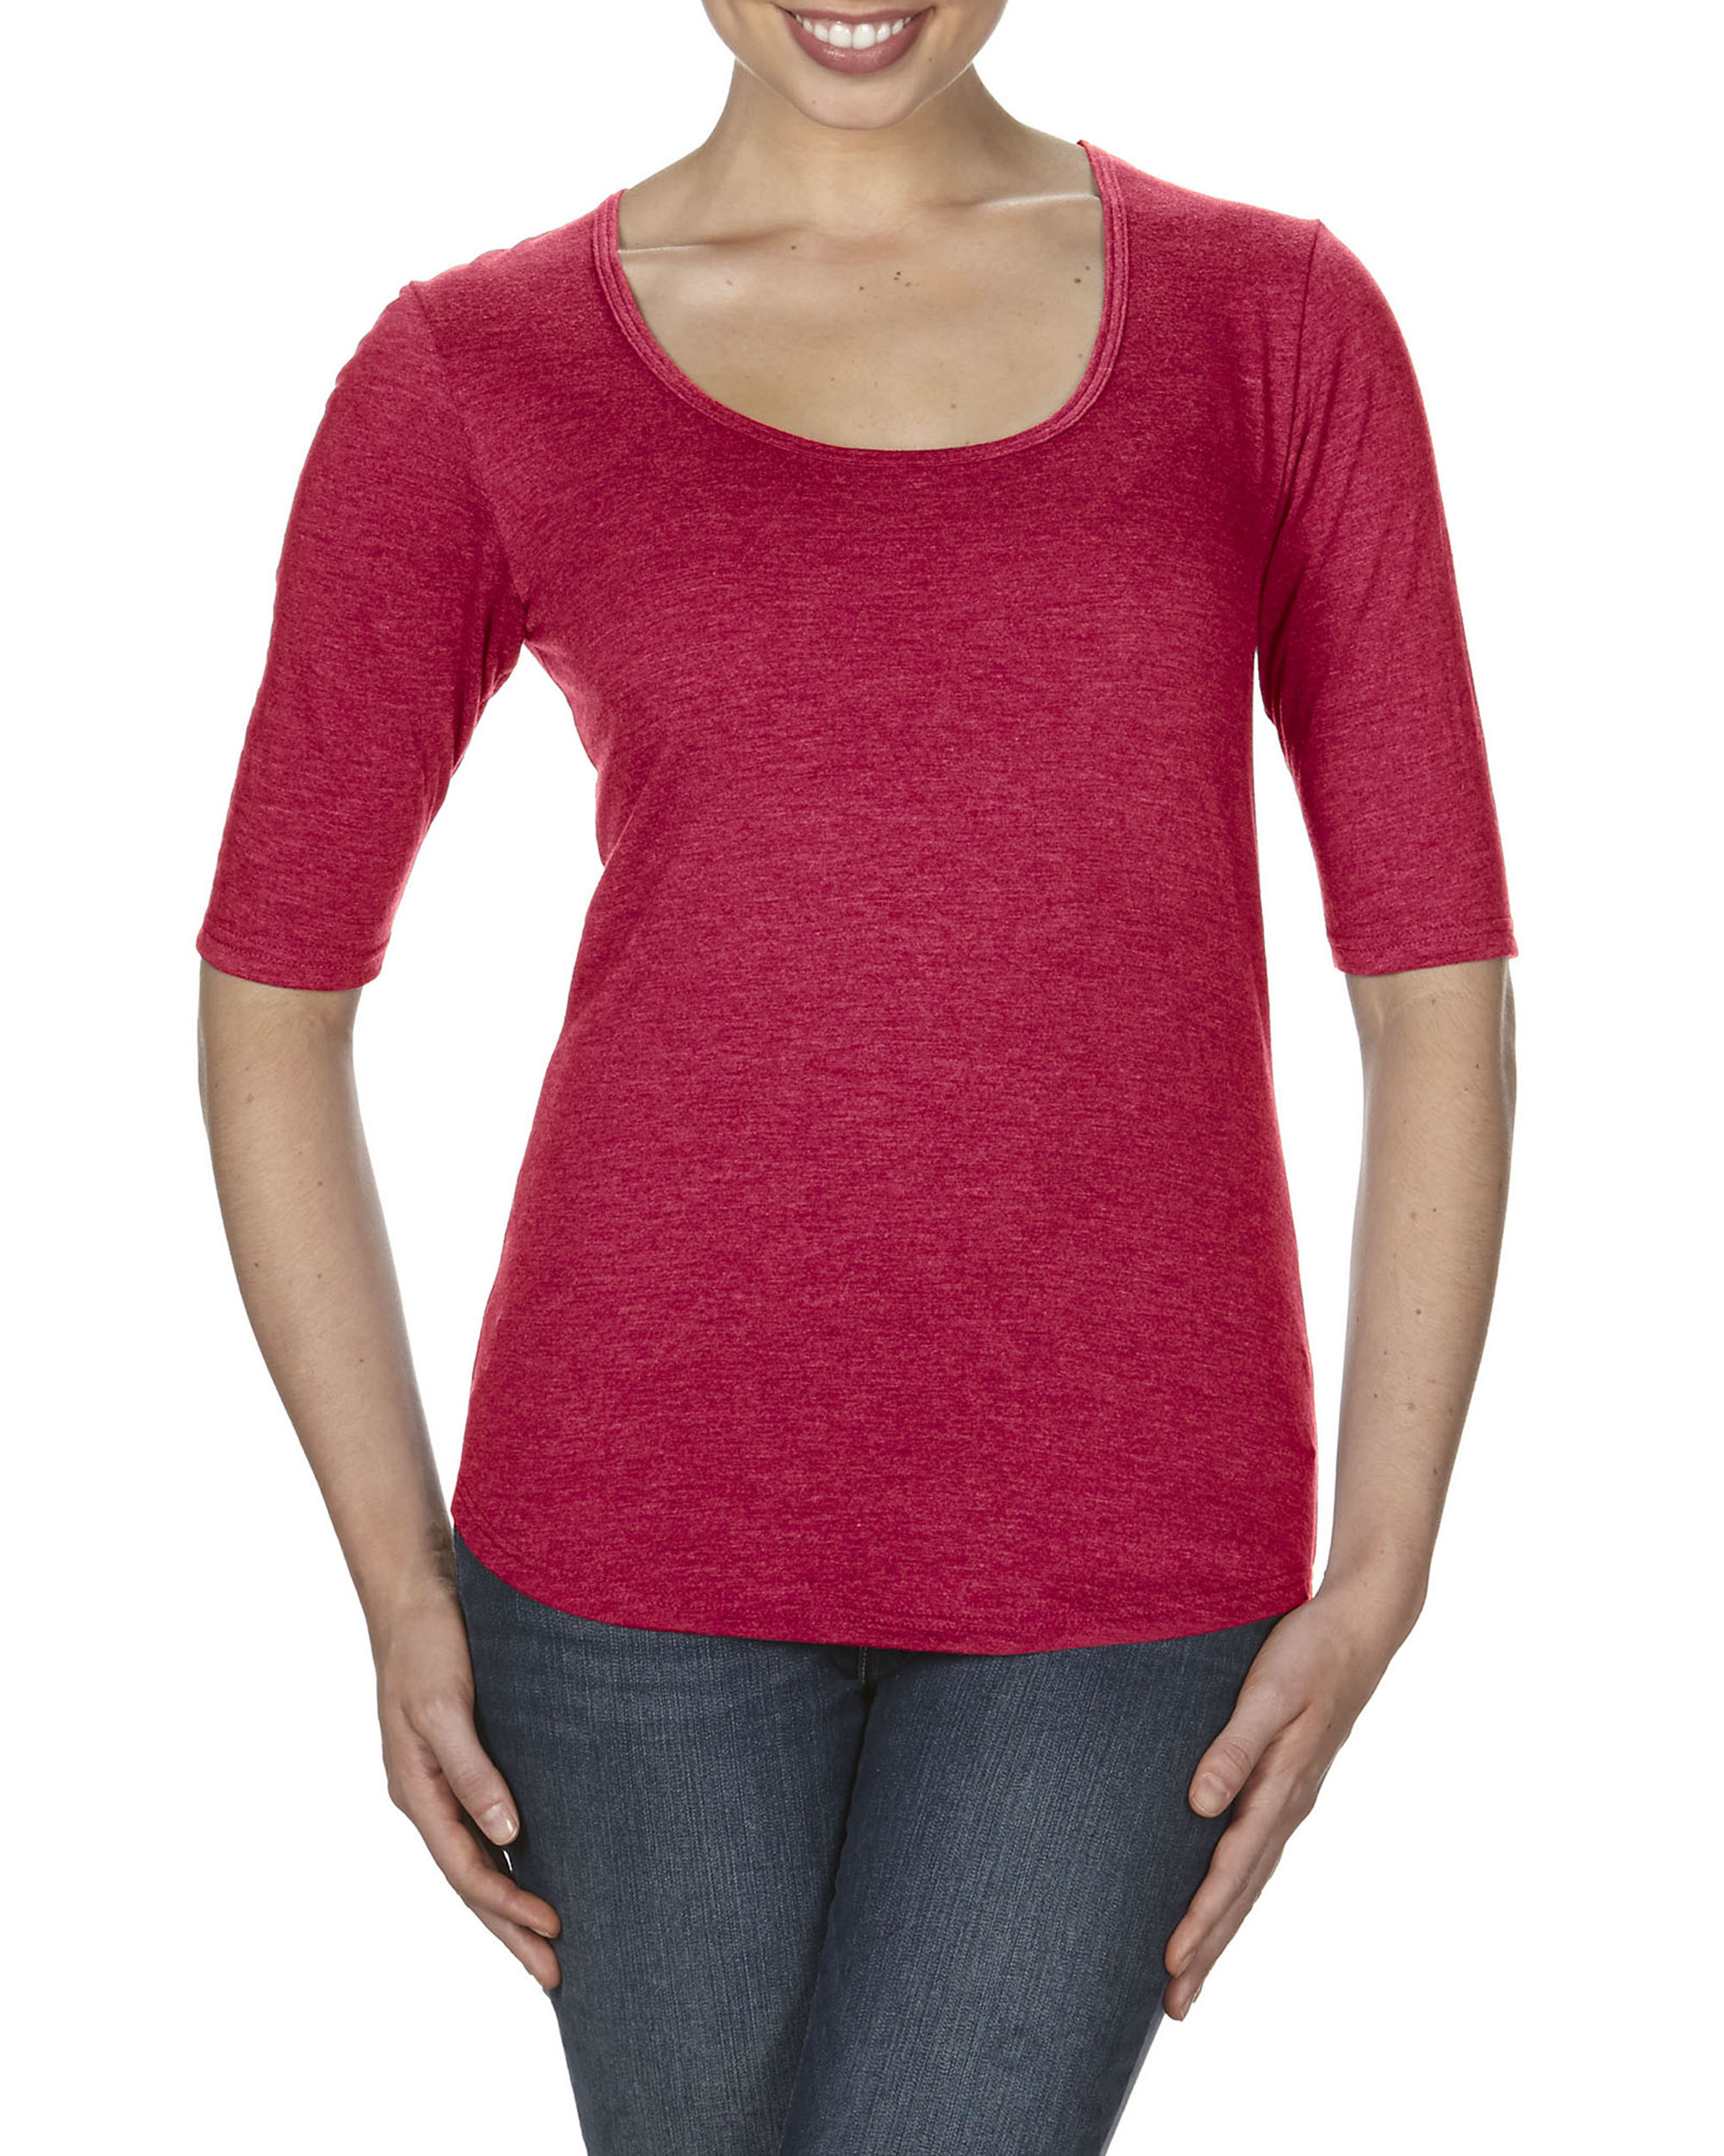 T-shirt Women’s Tri-Blend Deep Scoop 1/2 Sleeve Tee ANVIL